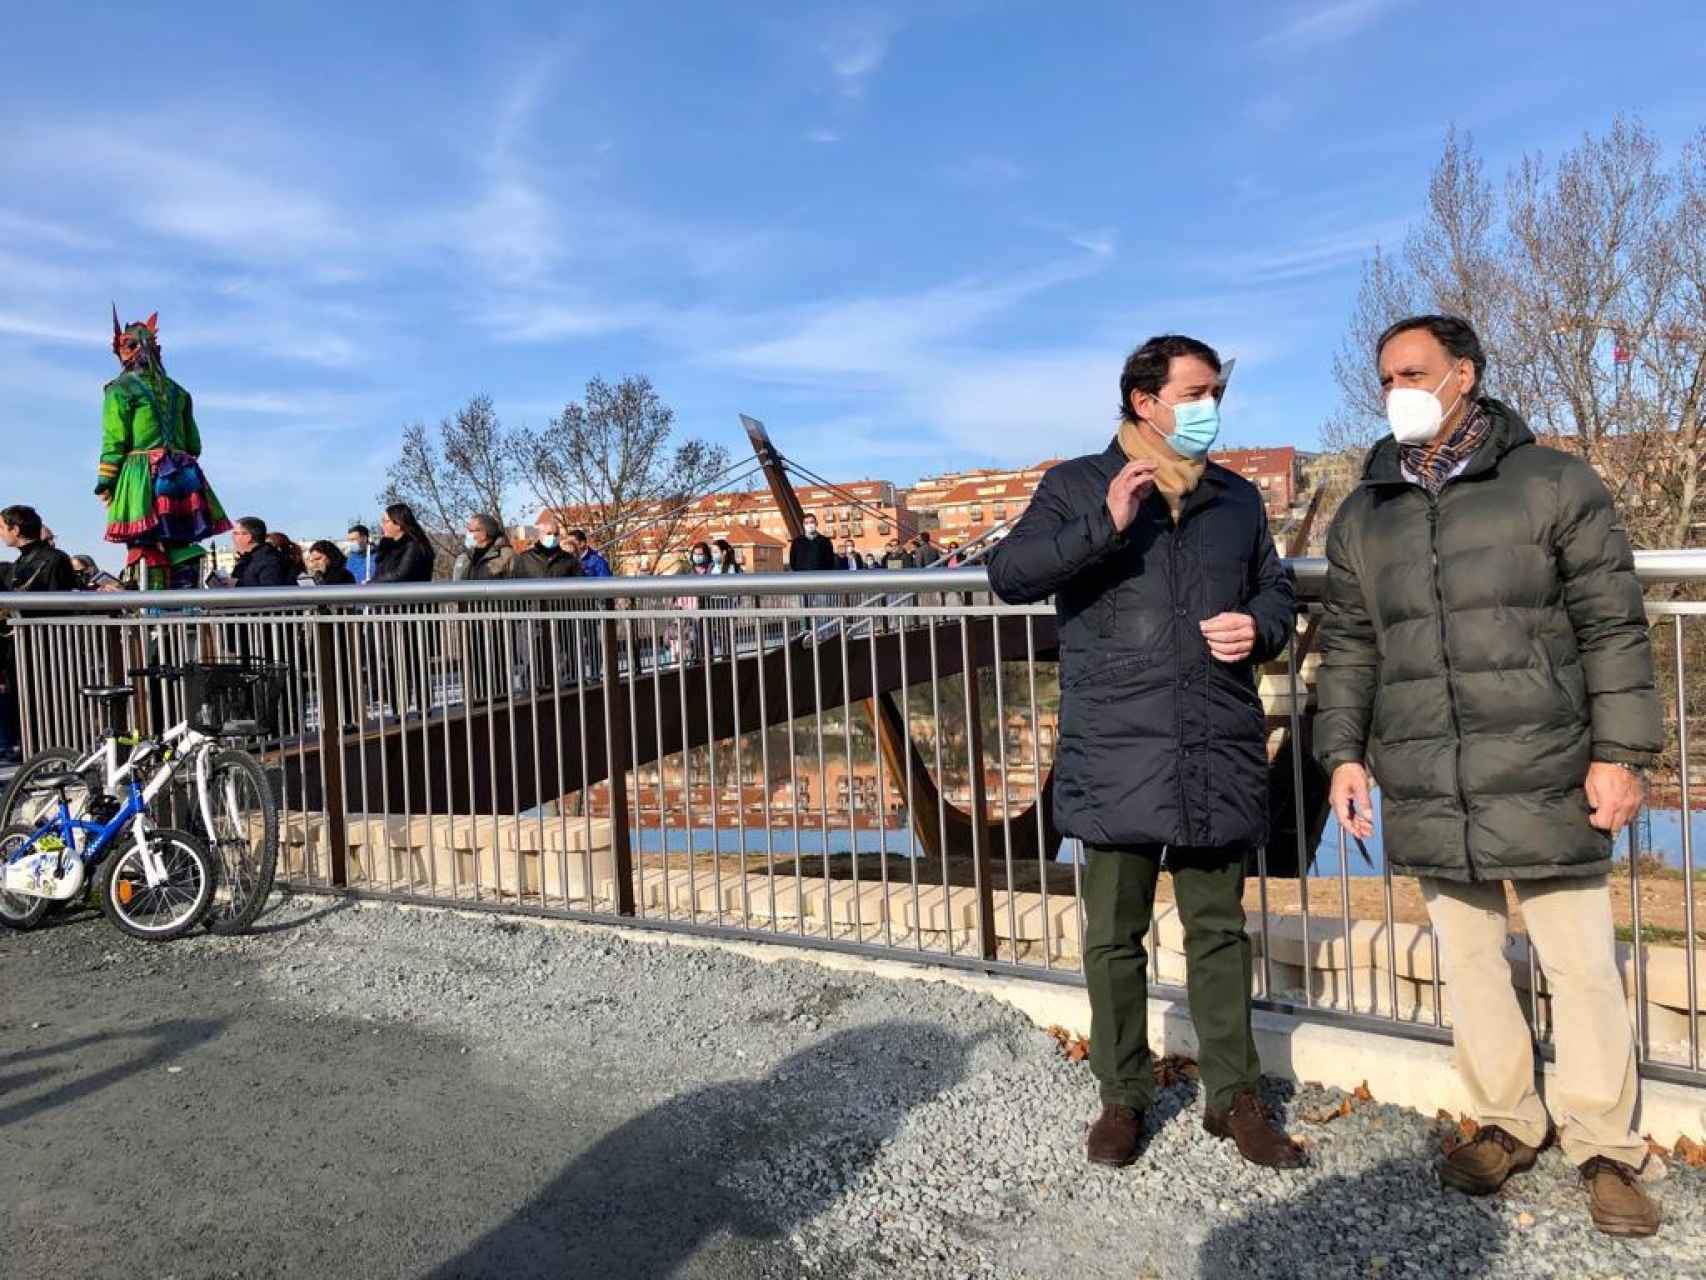 Fernández Mañueco acompaña al alcalde de Salamanca en la apertura de la pasarela